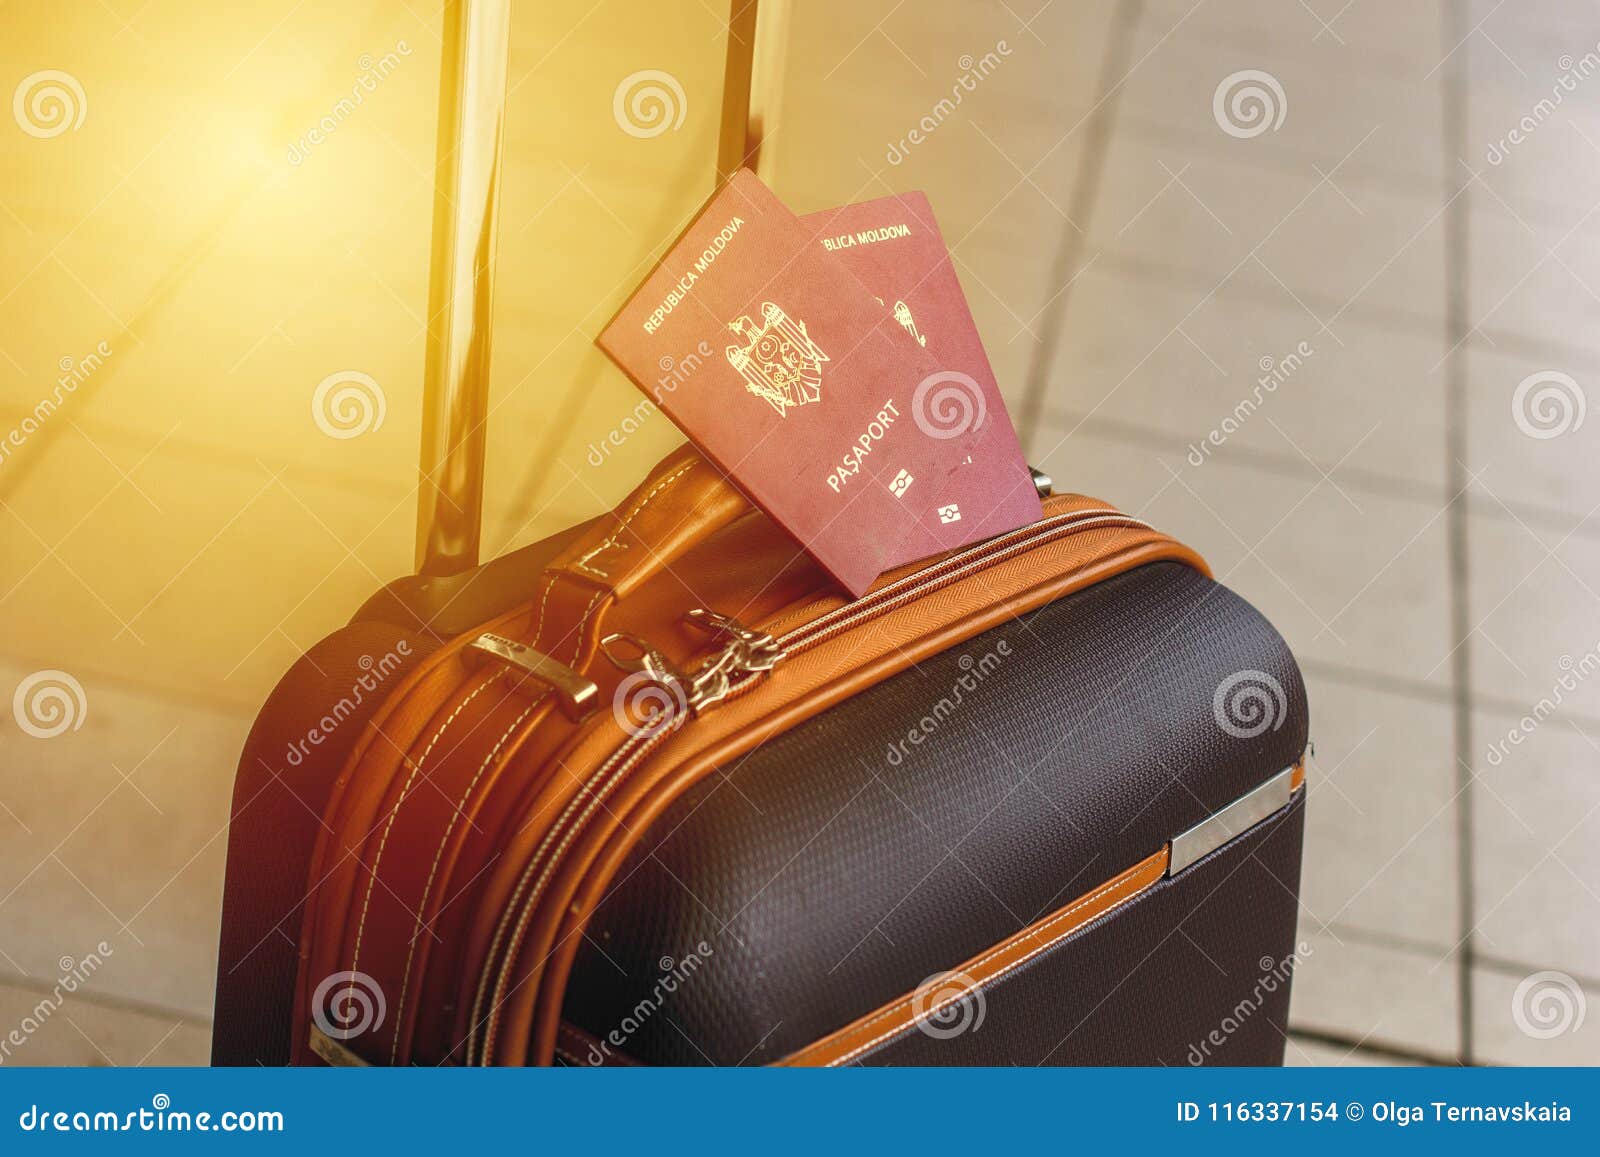 Closeup of passports on the luggage. Travel or emigration concept. Biometric passport of Moldova